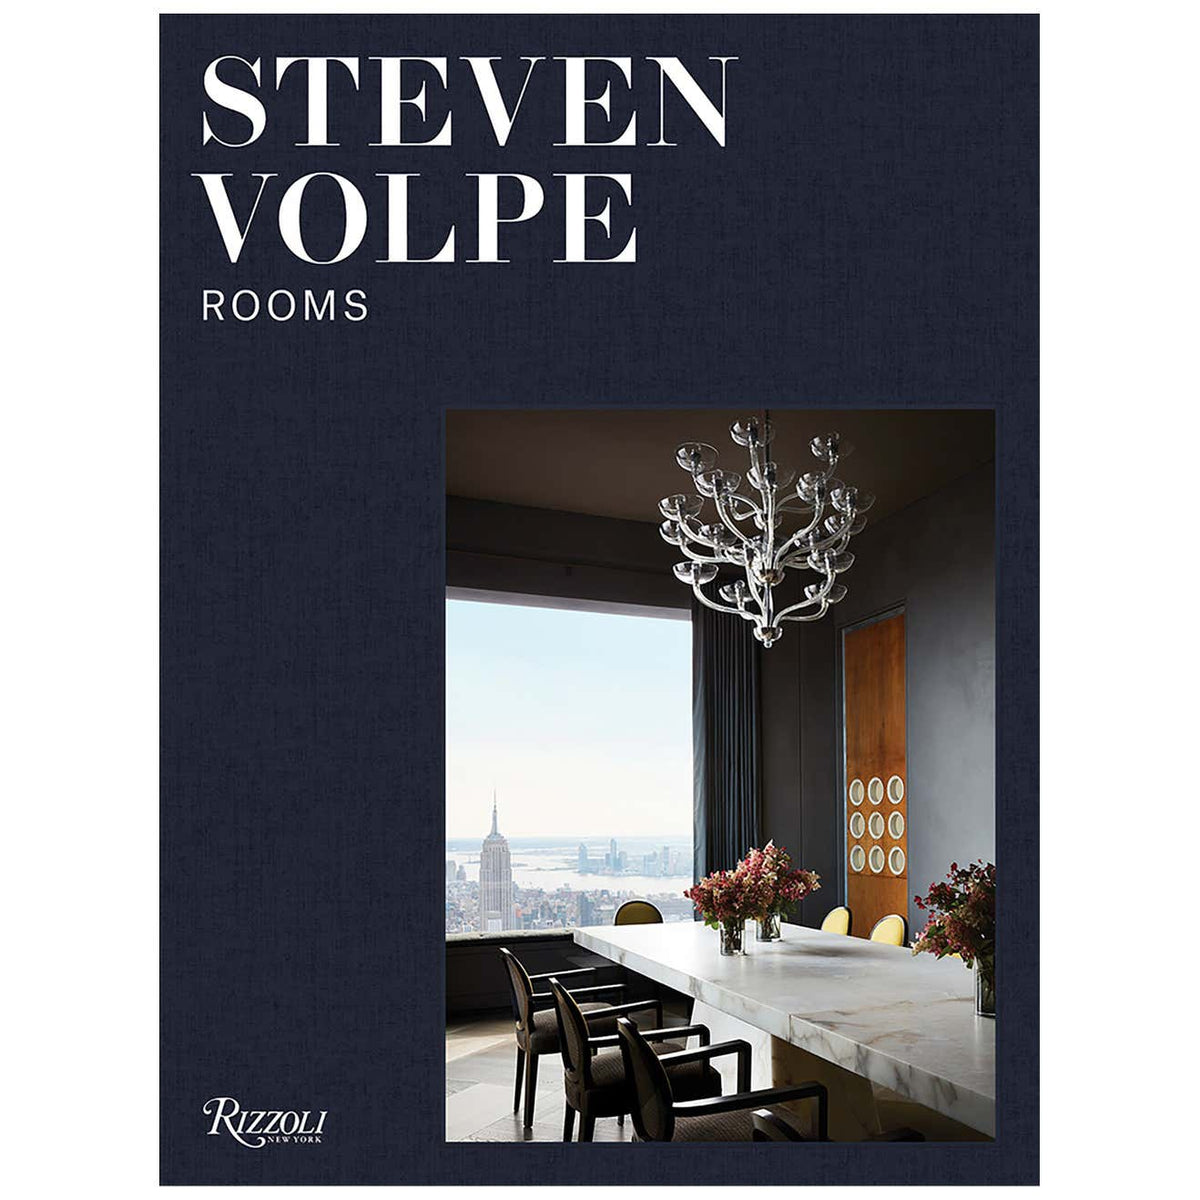 Rooms: Steven Volpe